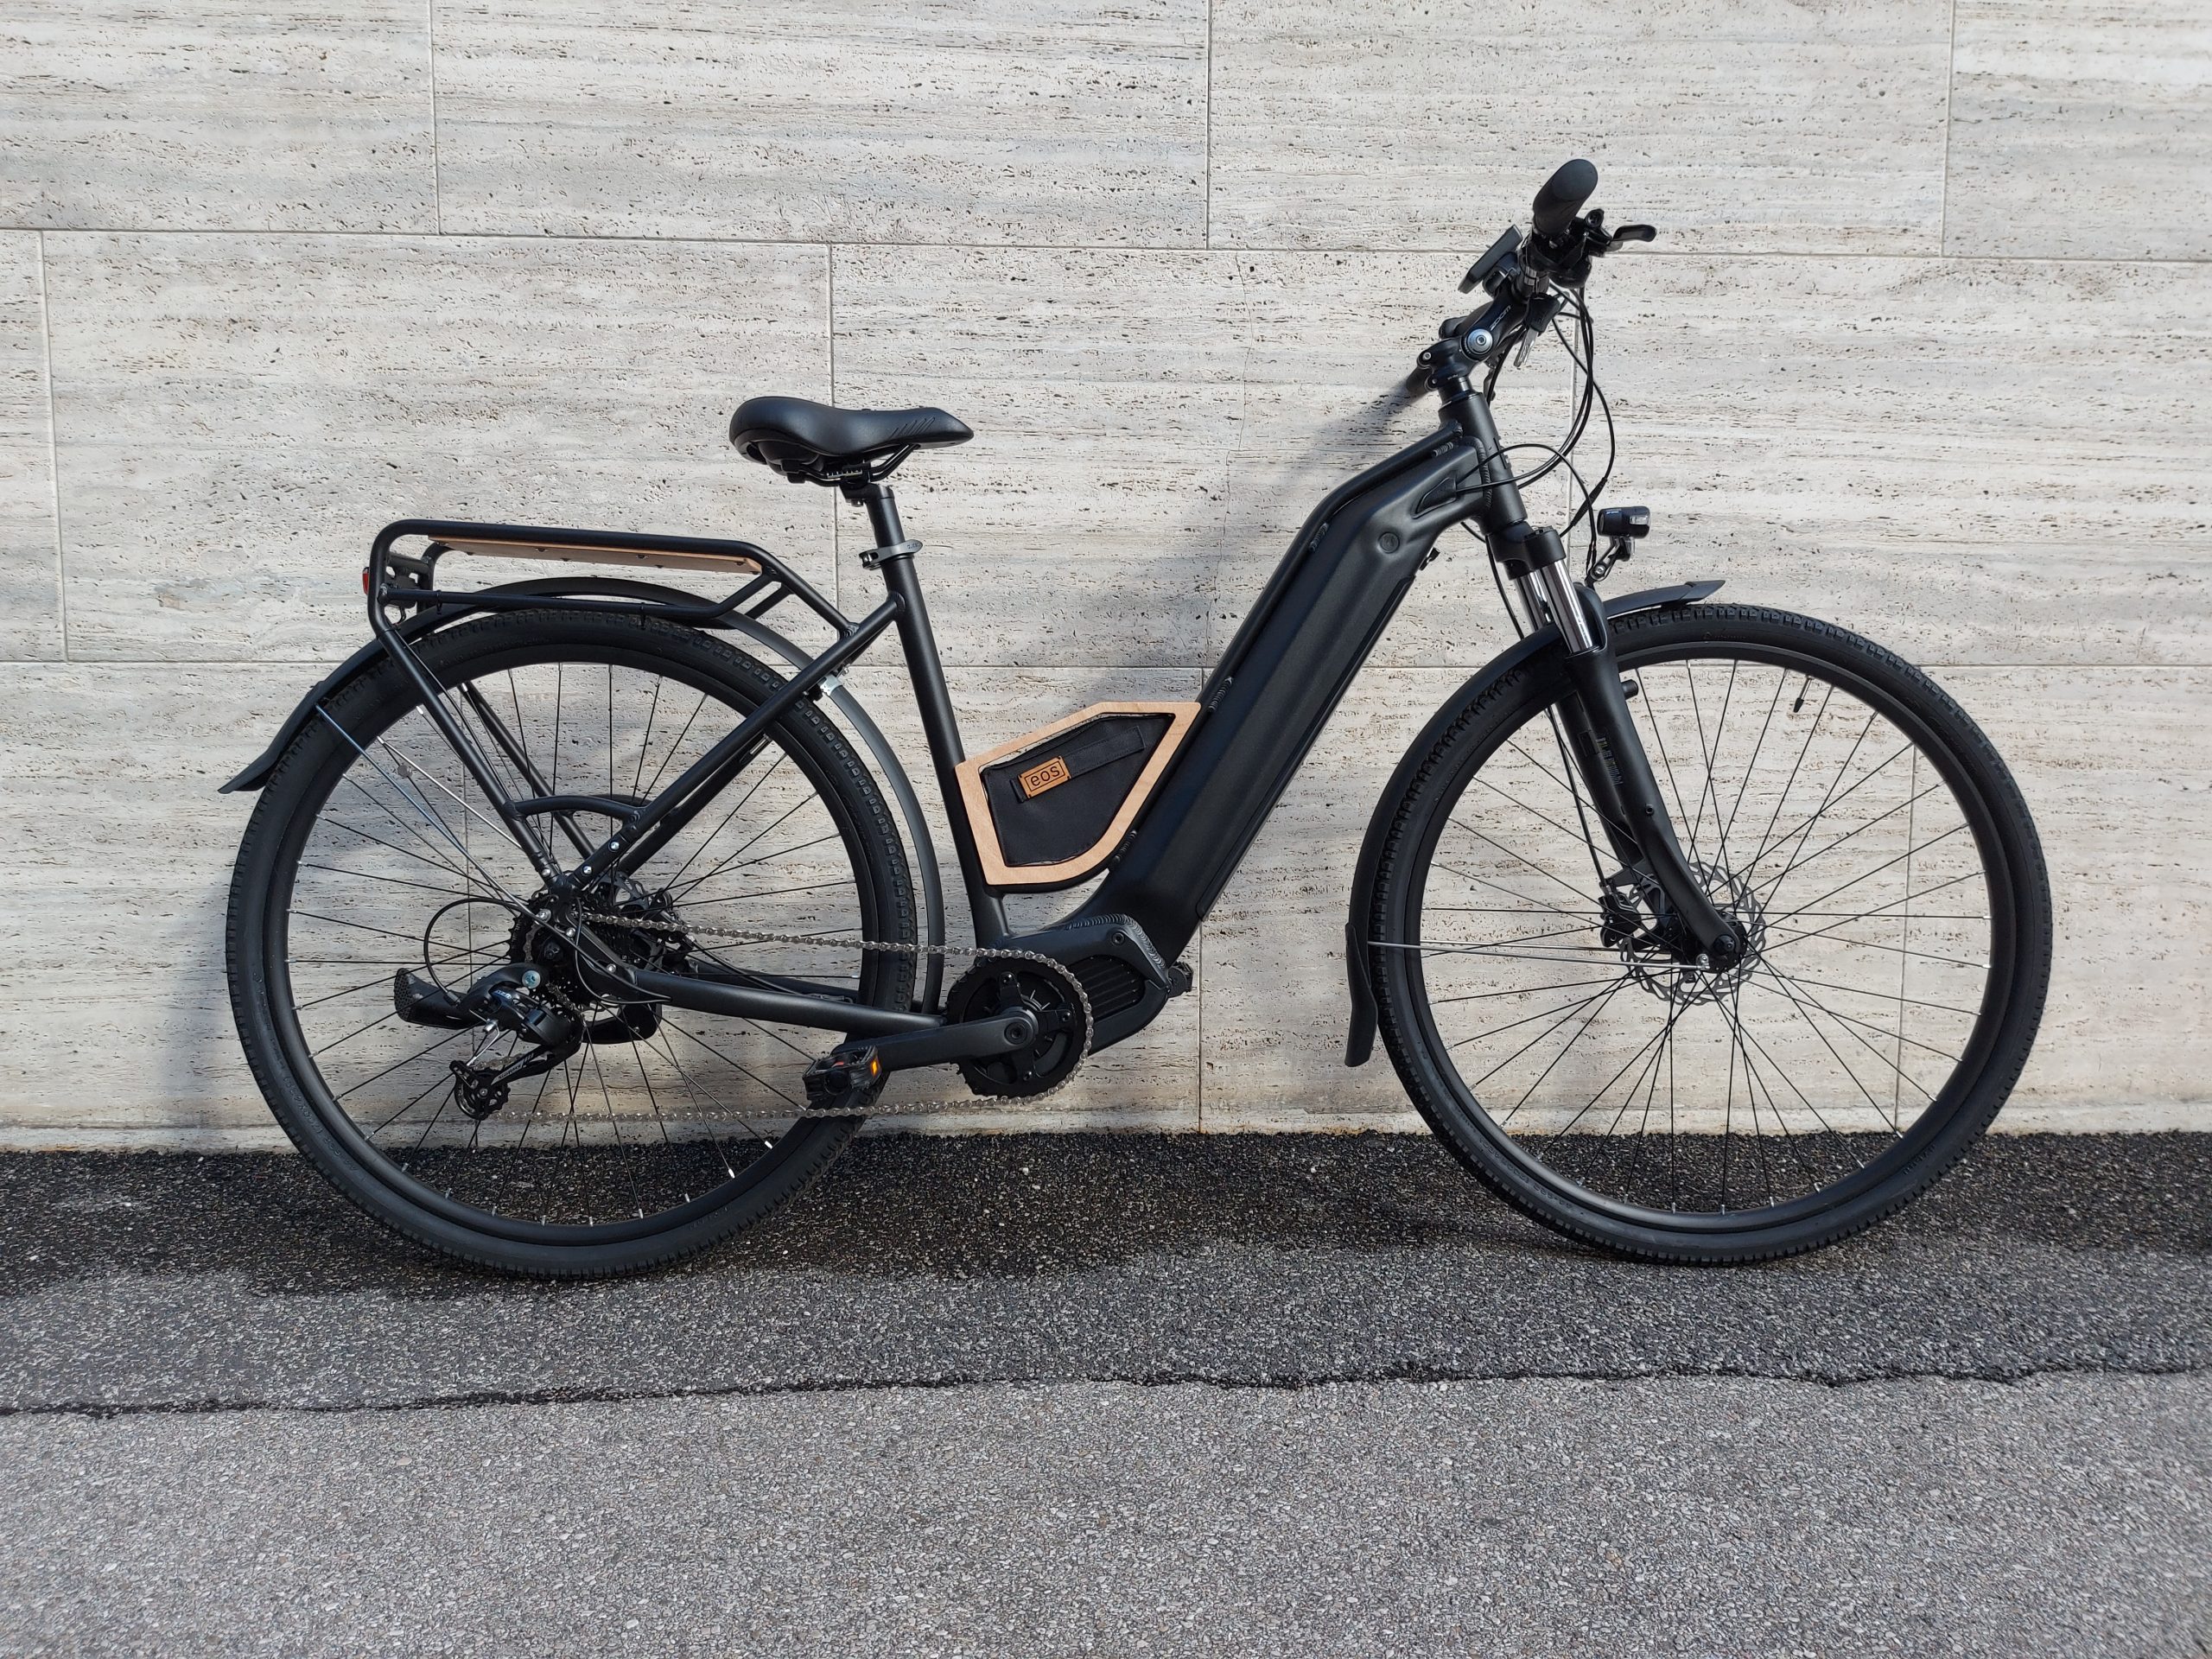 greenbike pesaro-bici elettriche pesaro-bici con motore centrale Oli-Mechane-bici Eos